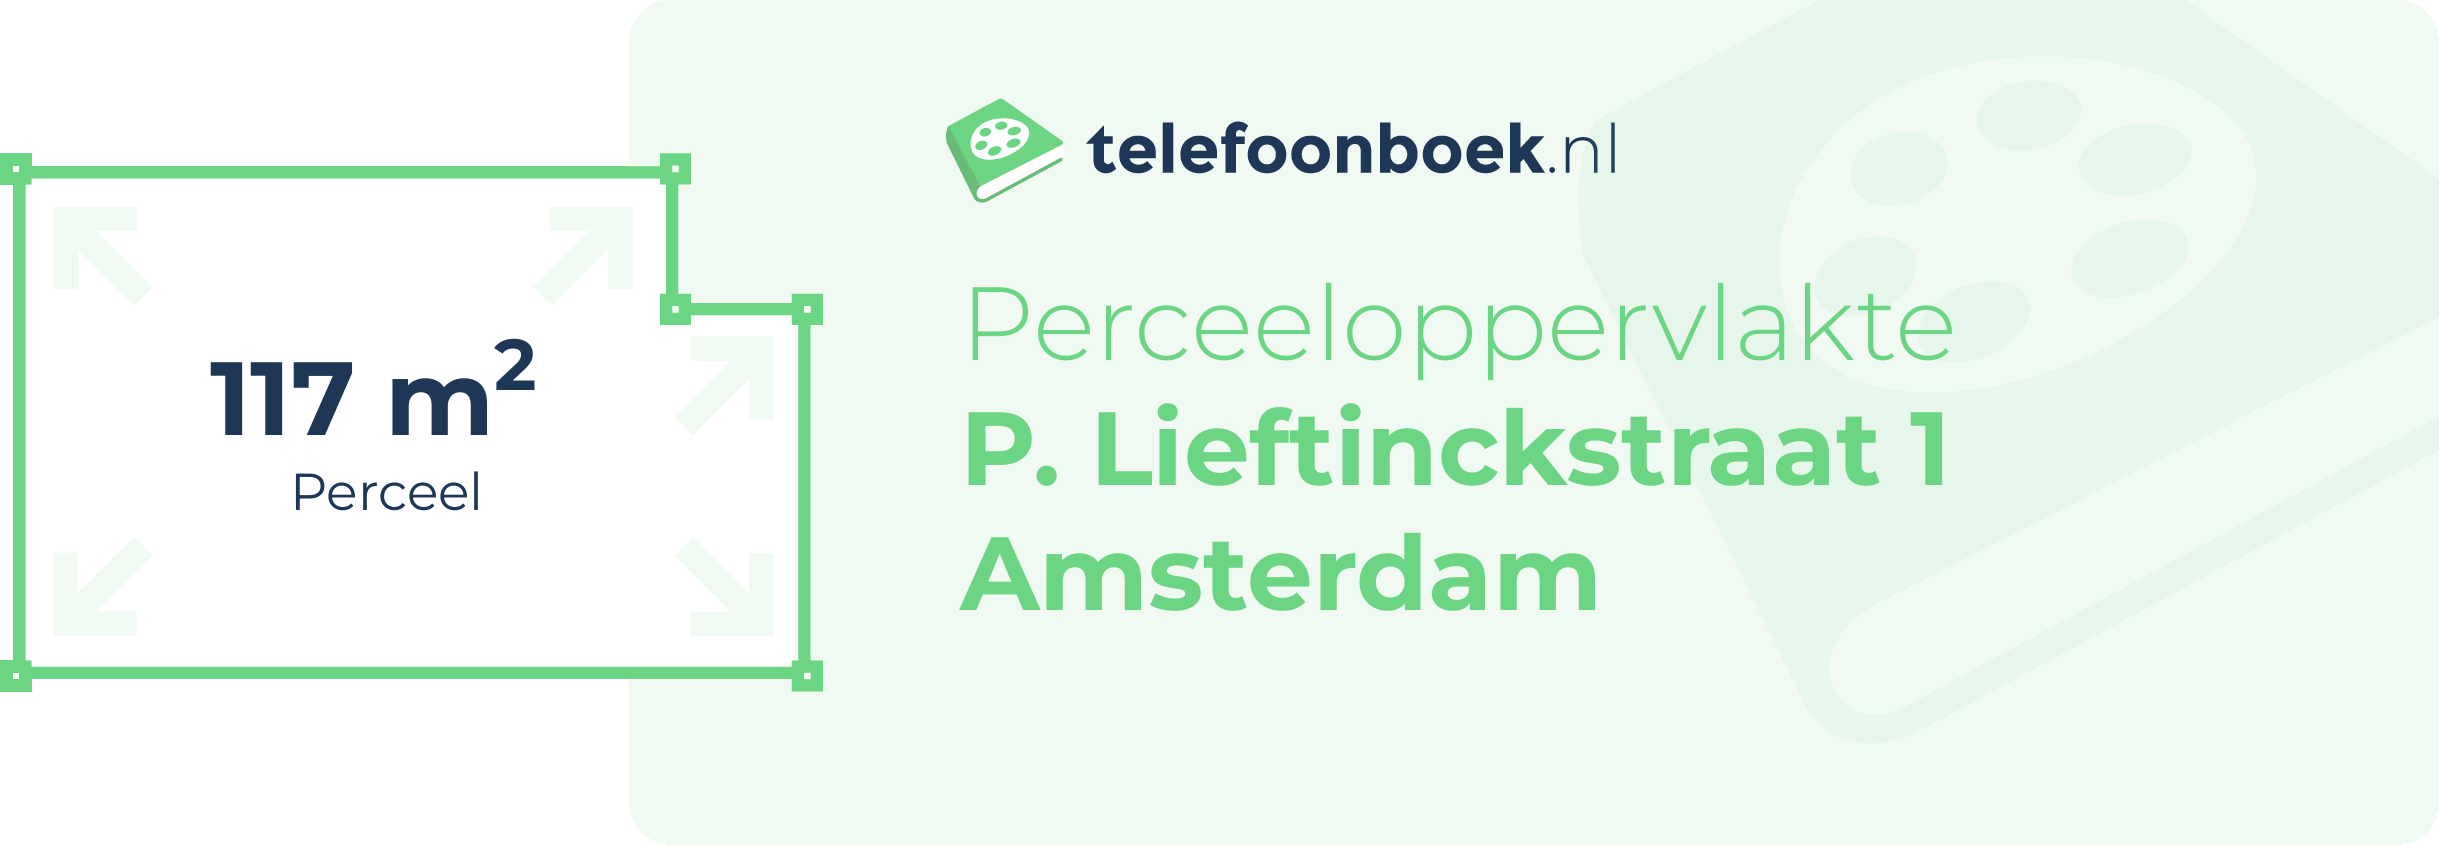 Perceeloppervlakte P. Lieftinckstraat 1 Amsterdam